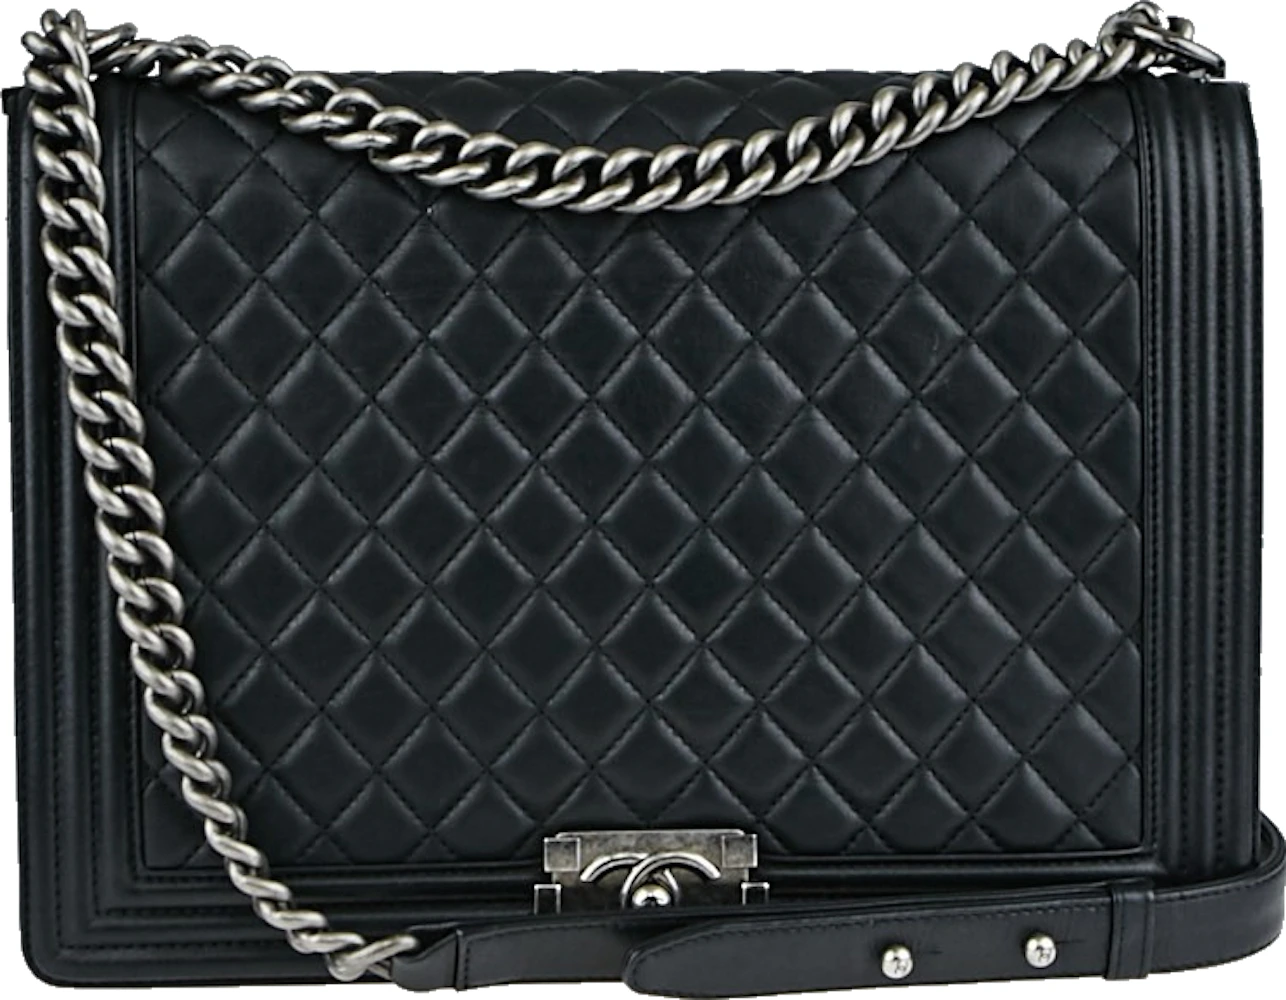 Chanel Black Chevron Lambskin Leather New Medium Boy Bag Chanel